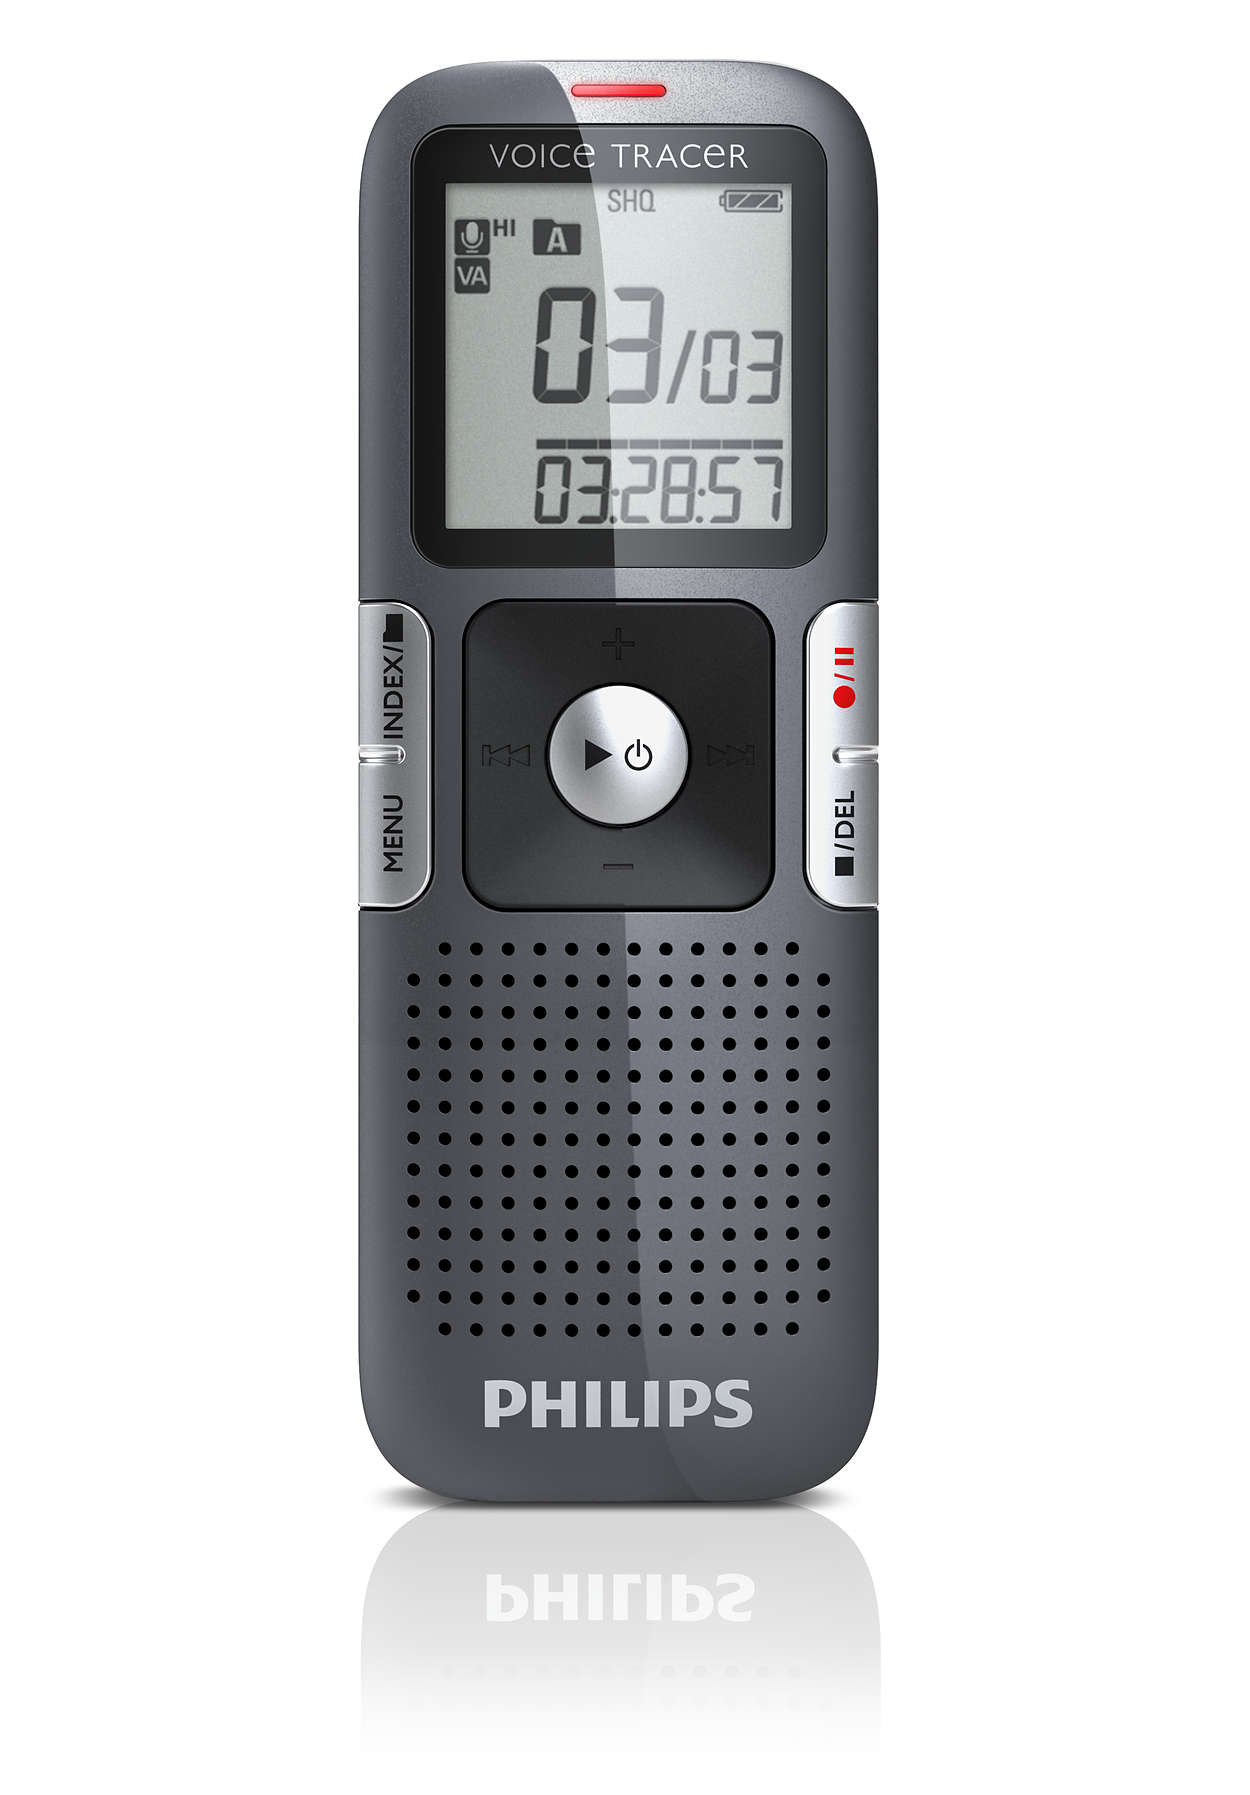 Диктофон филипс. Philips Voice Tracer. Диктофон с большими кнопками. Китайский диктофон. Диктофон.